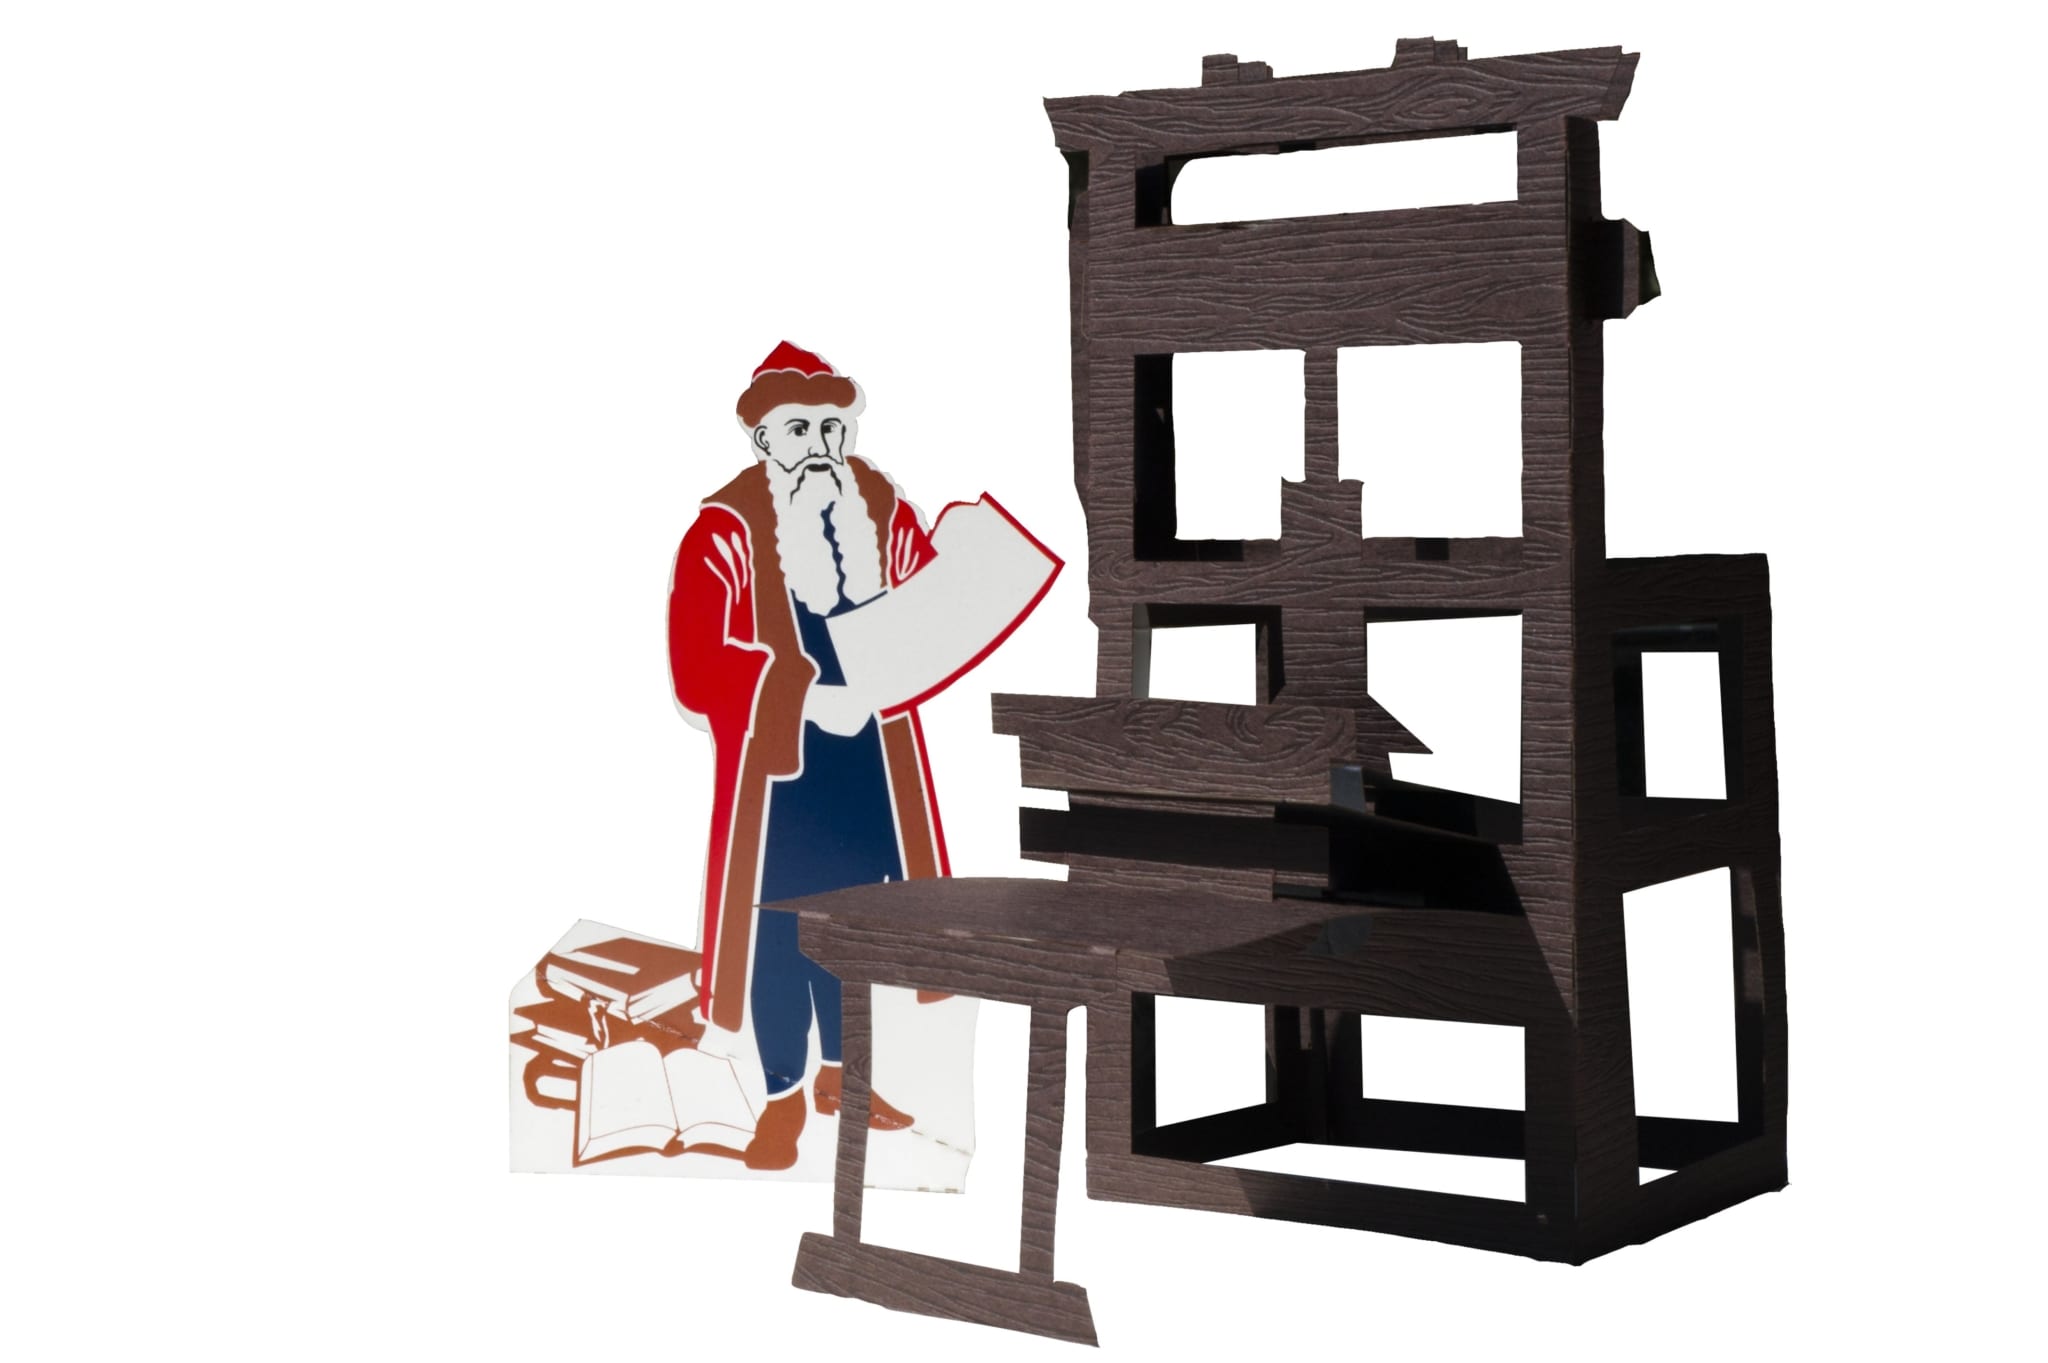 Johannes Gutenberg and his Gutenberg Printing Press